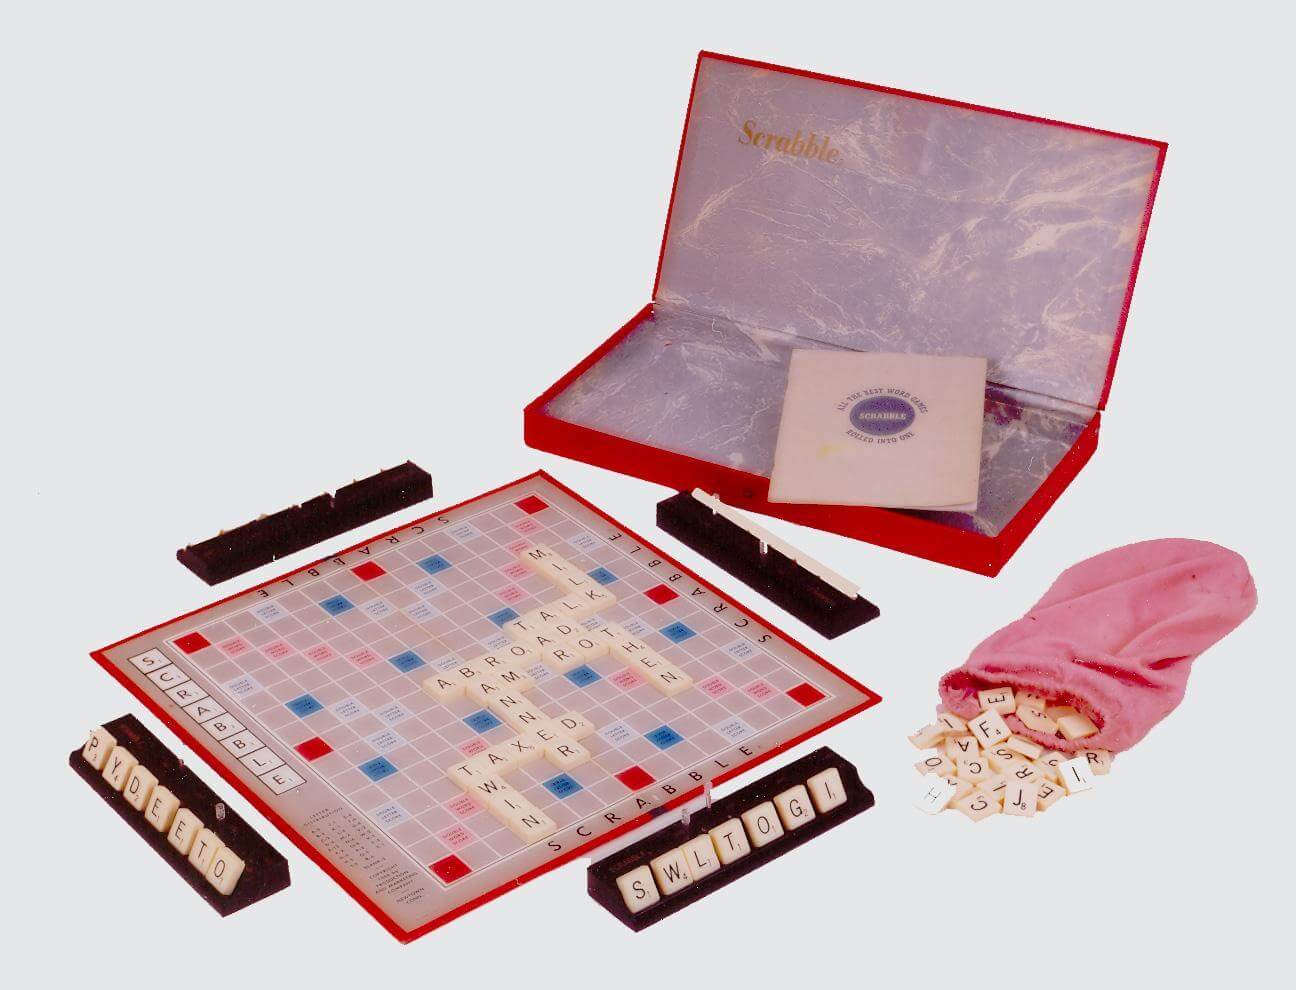 1948 Scrabble game